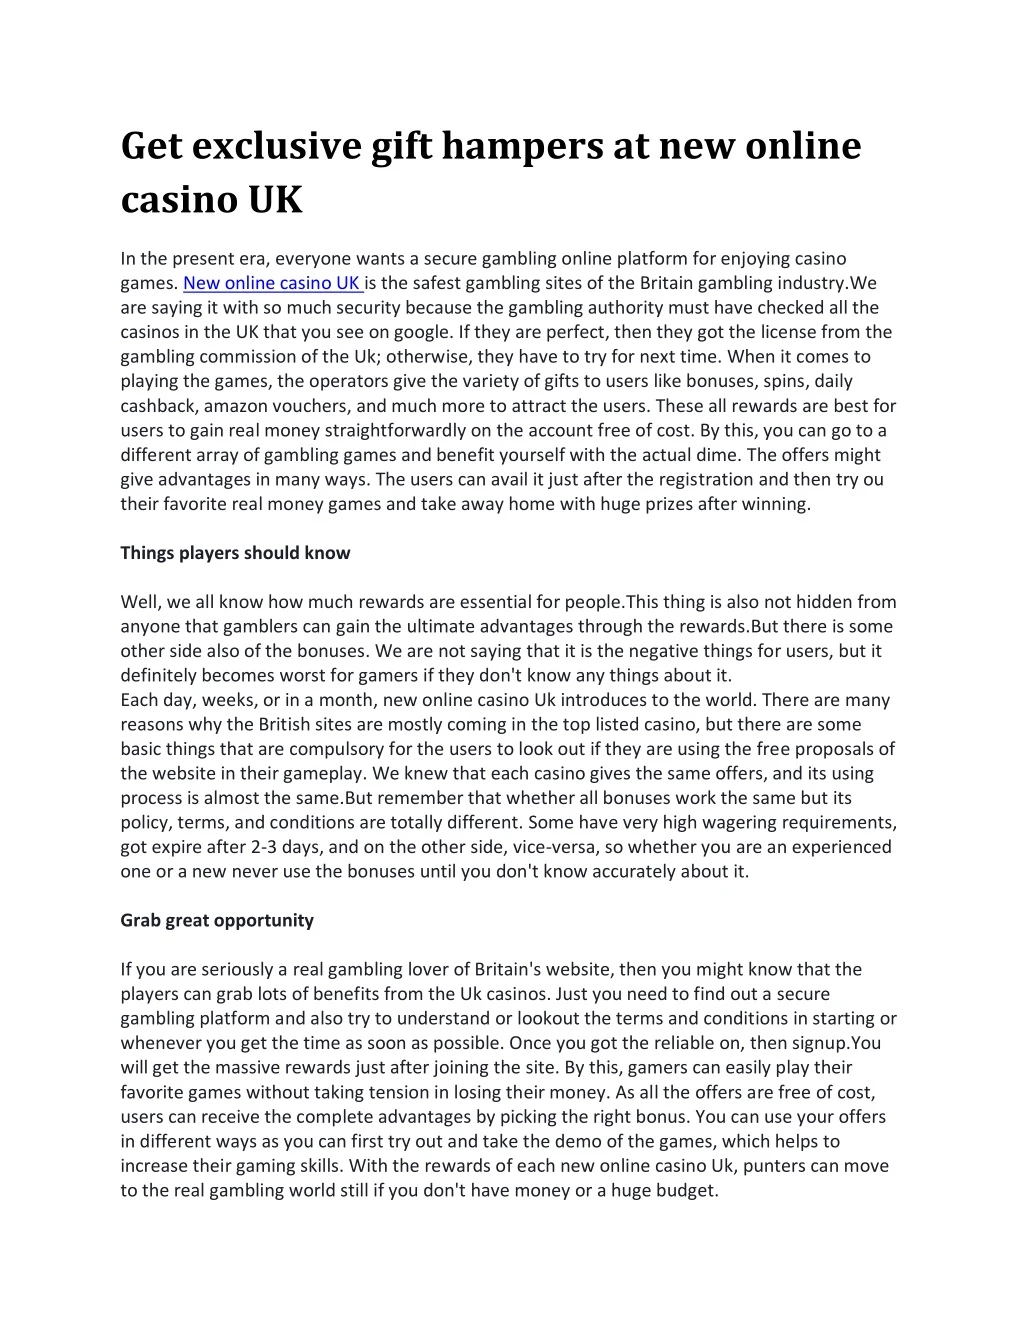 get exclusive gift hampers at new online casino uk